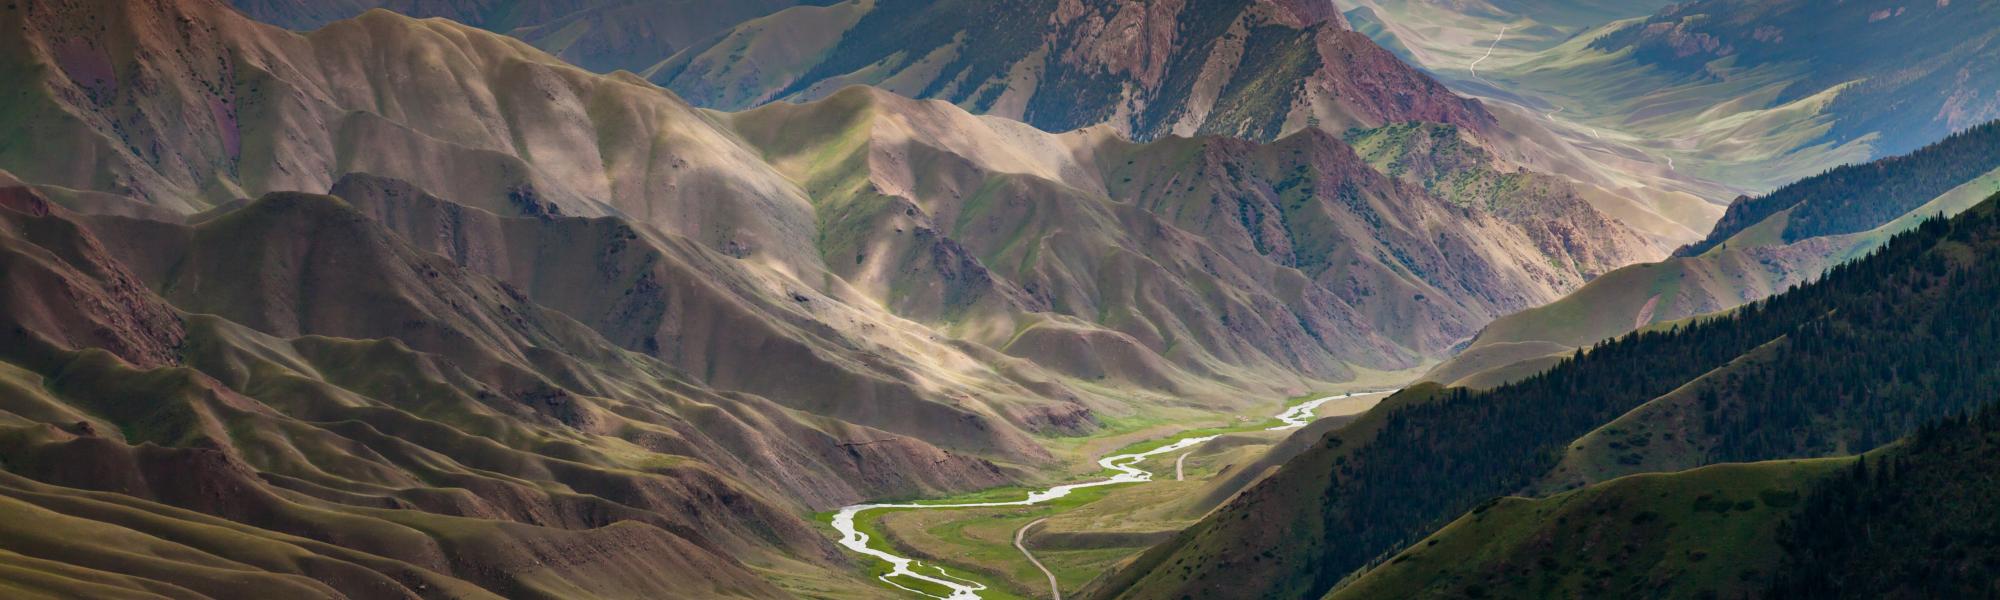 Кыргызстан — Таджикистан — Афганистан — Иран (КТАИ): открытие транспортного коридора для перевозок МДП